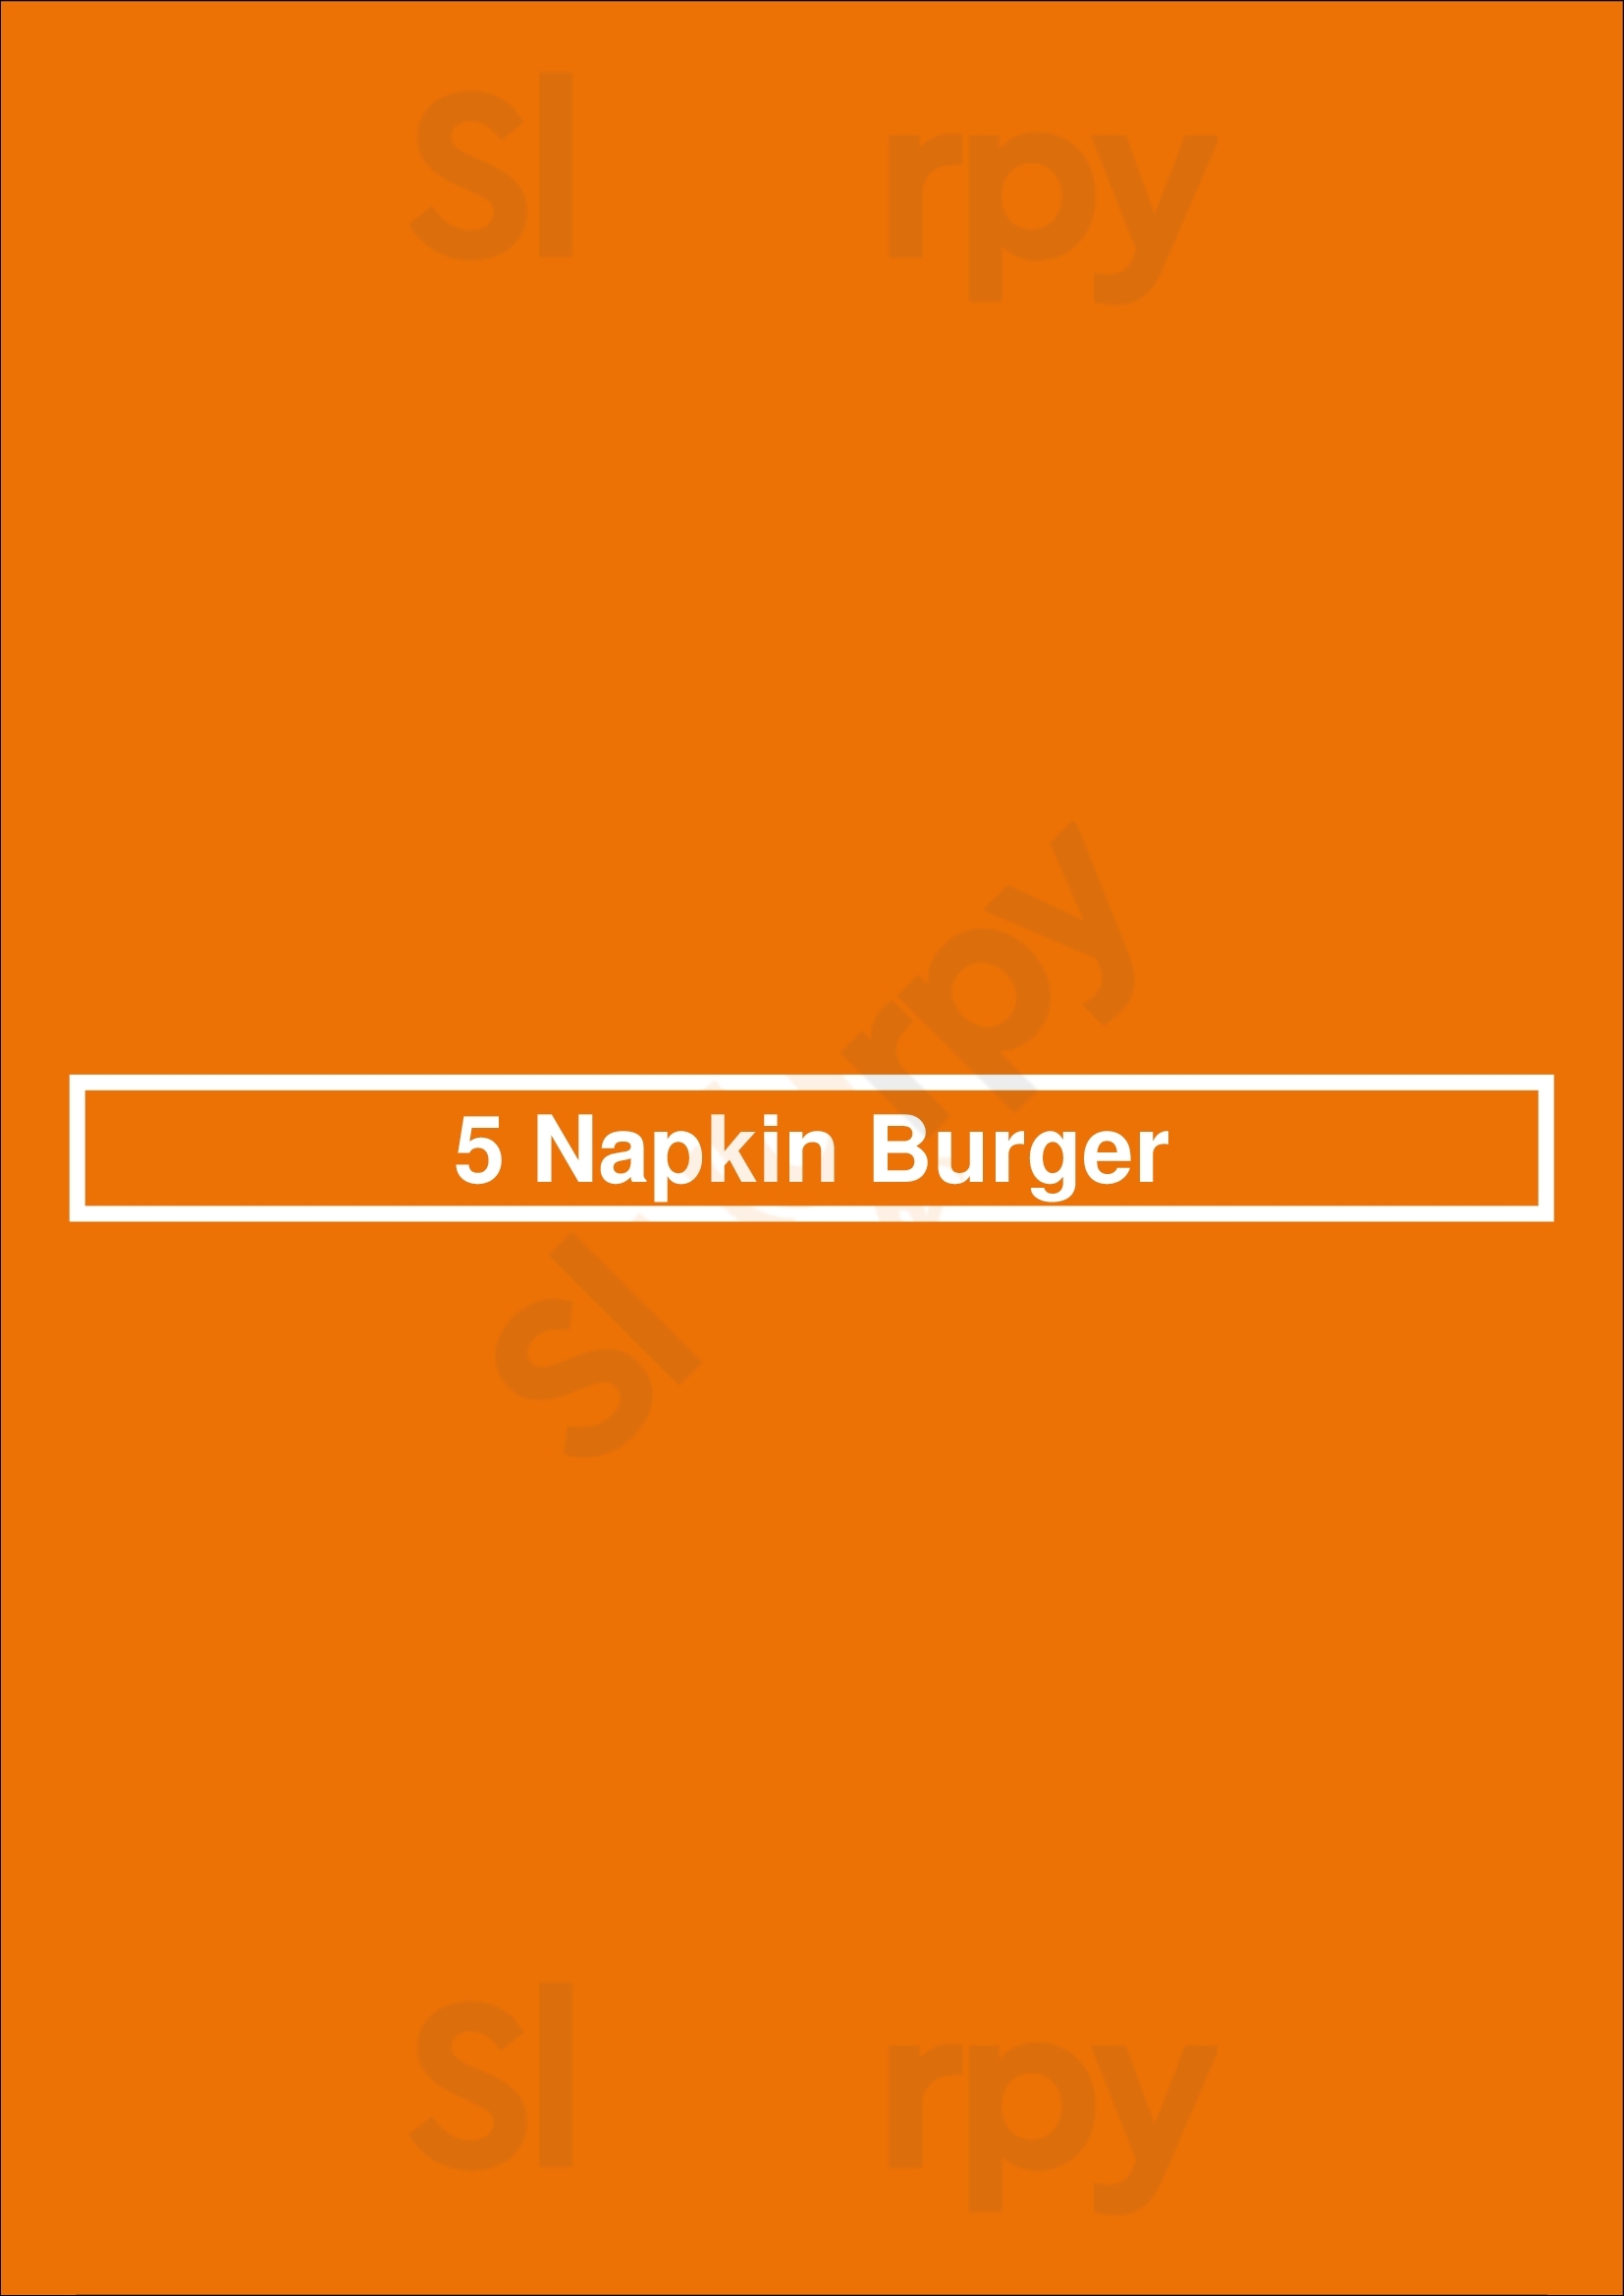 5 Napkin Burger New York City Menu - 1